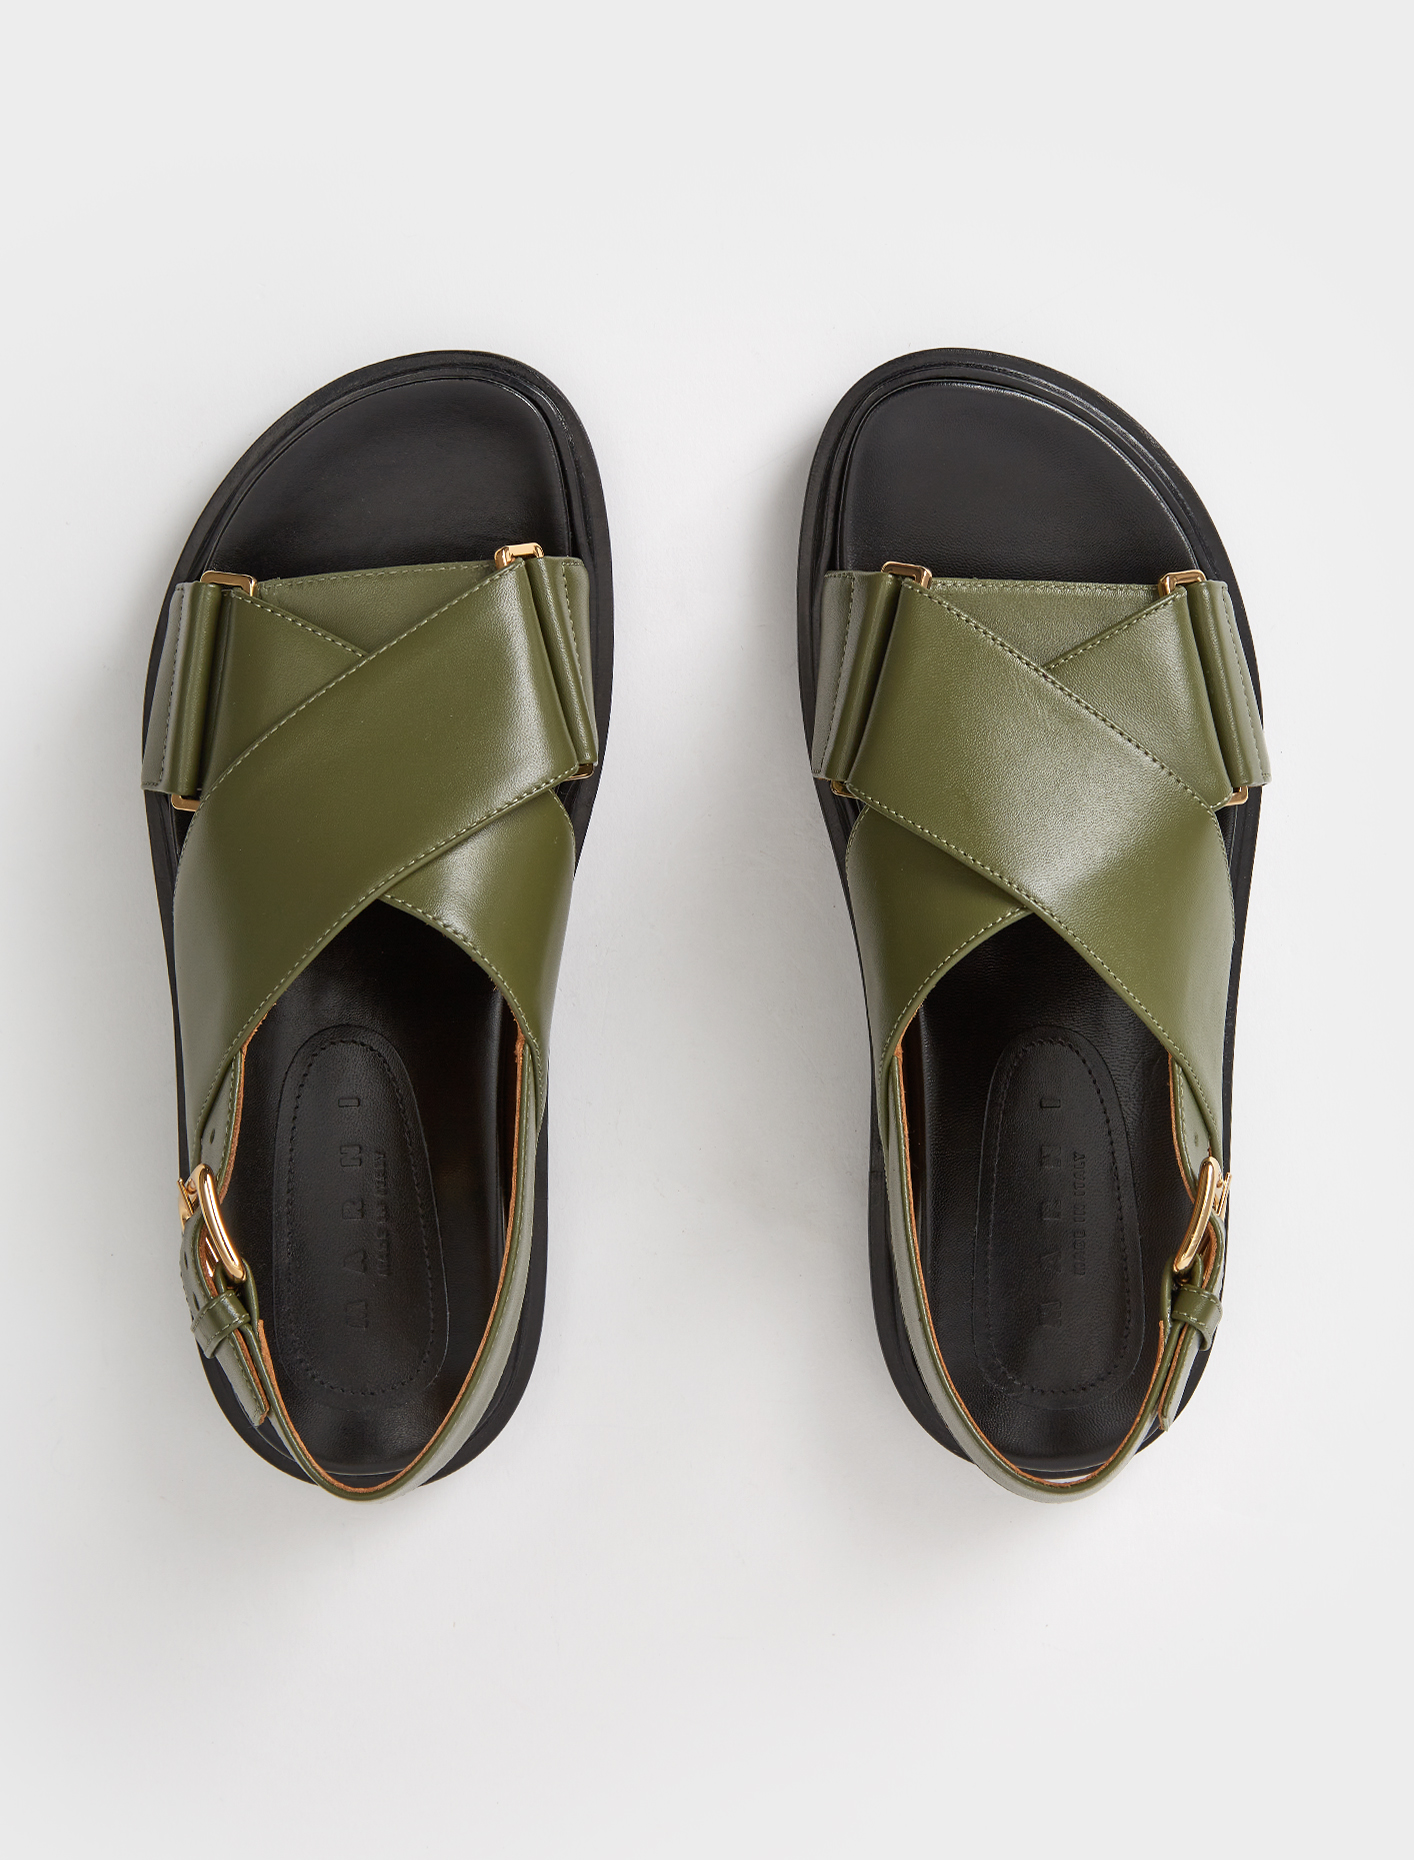 Marni Sandals in Dark Olive | Voo Store Berlin | Worldwide Shipping